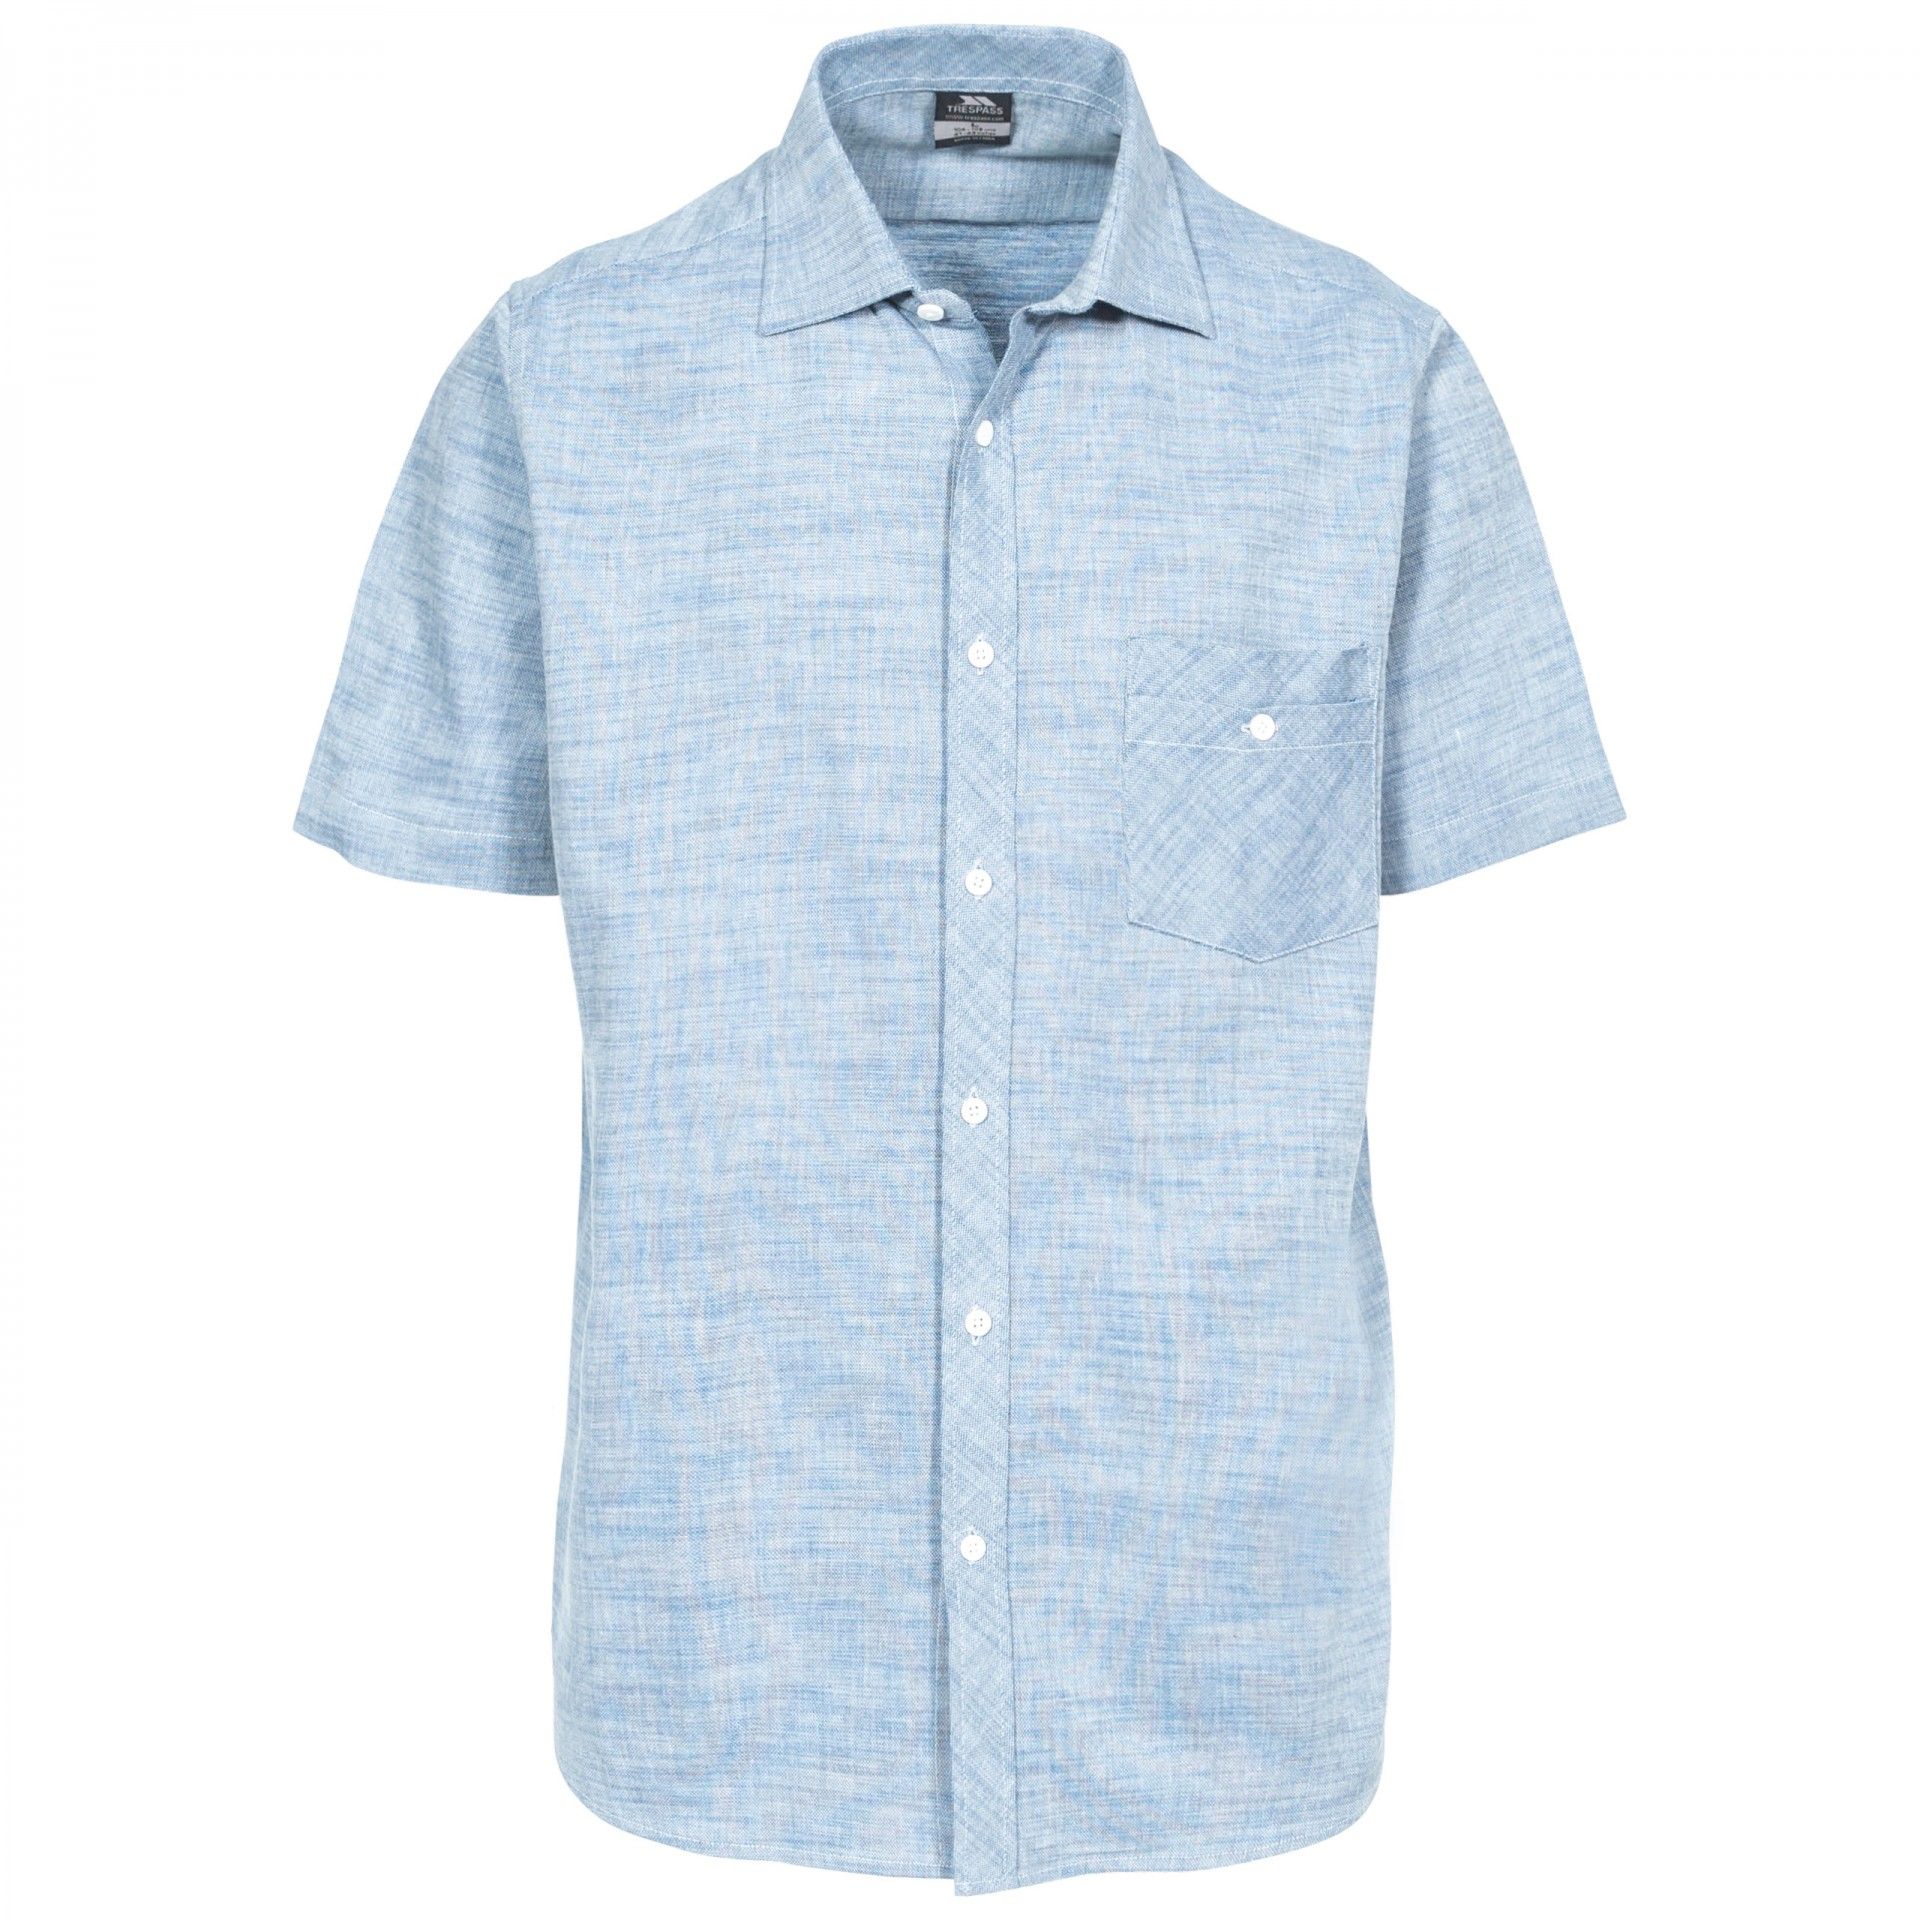 2 piece collar casual short sleeve shirt. Chest pocket. Button fastening. 100% woven cotton slub.